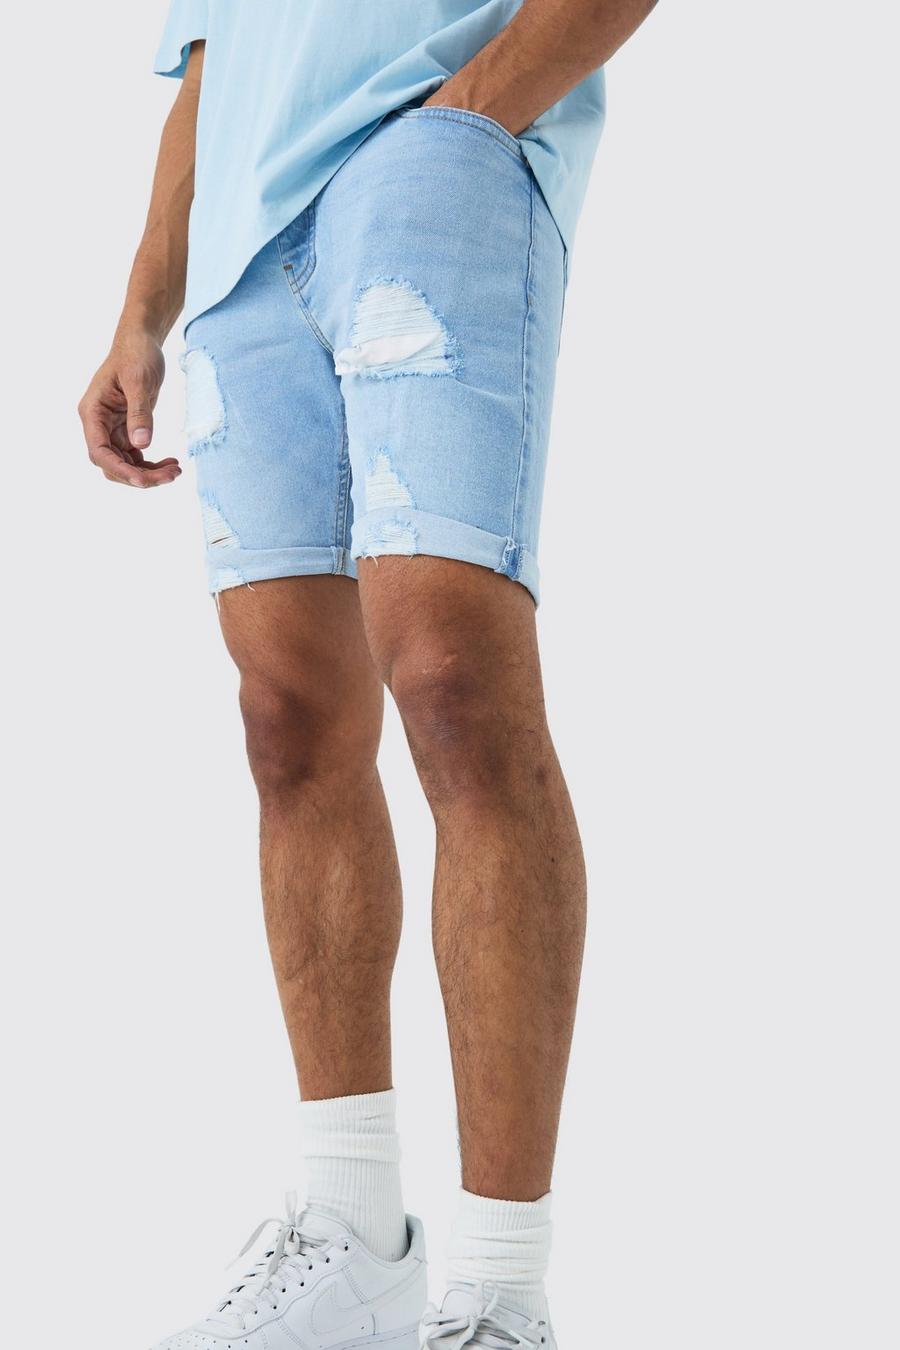 Men's Shorts, Shorts for Men